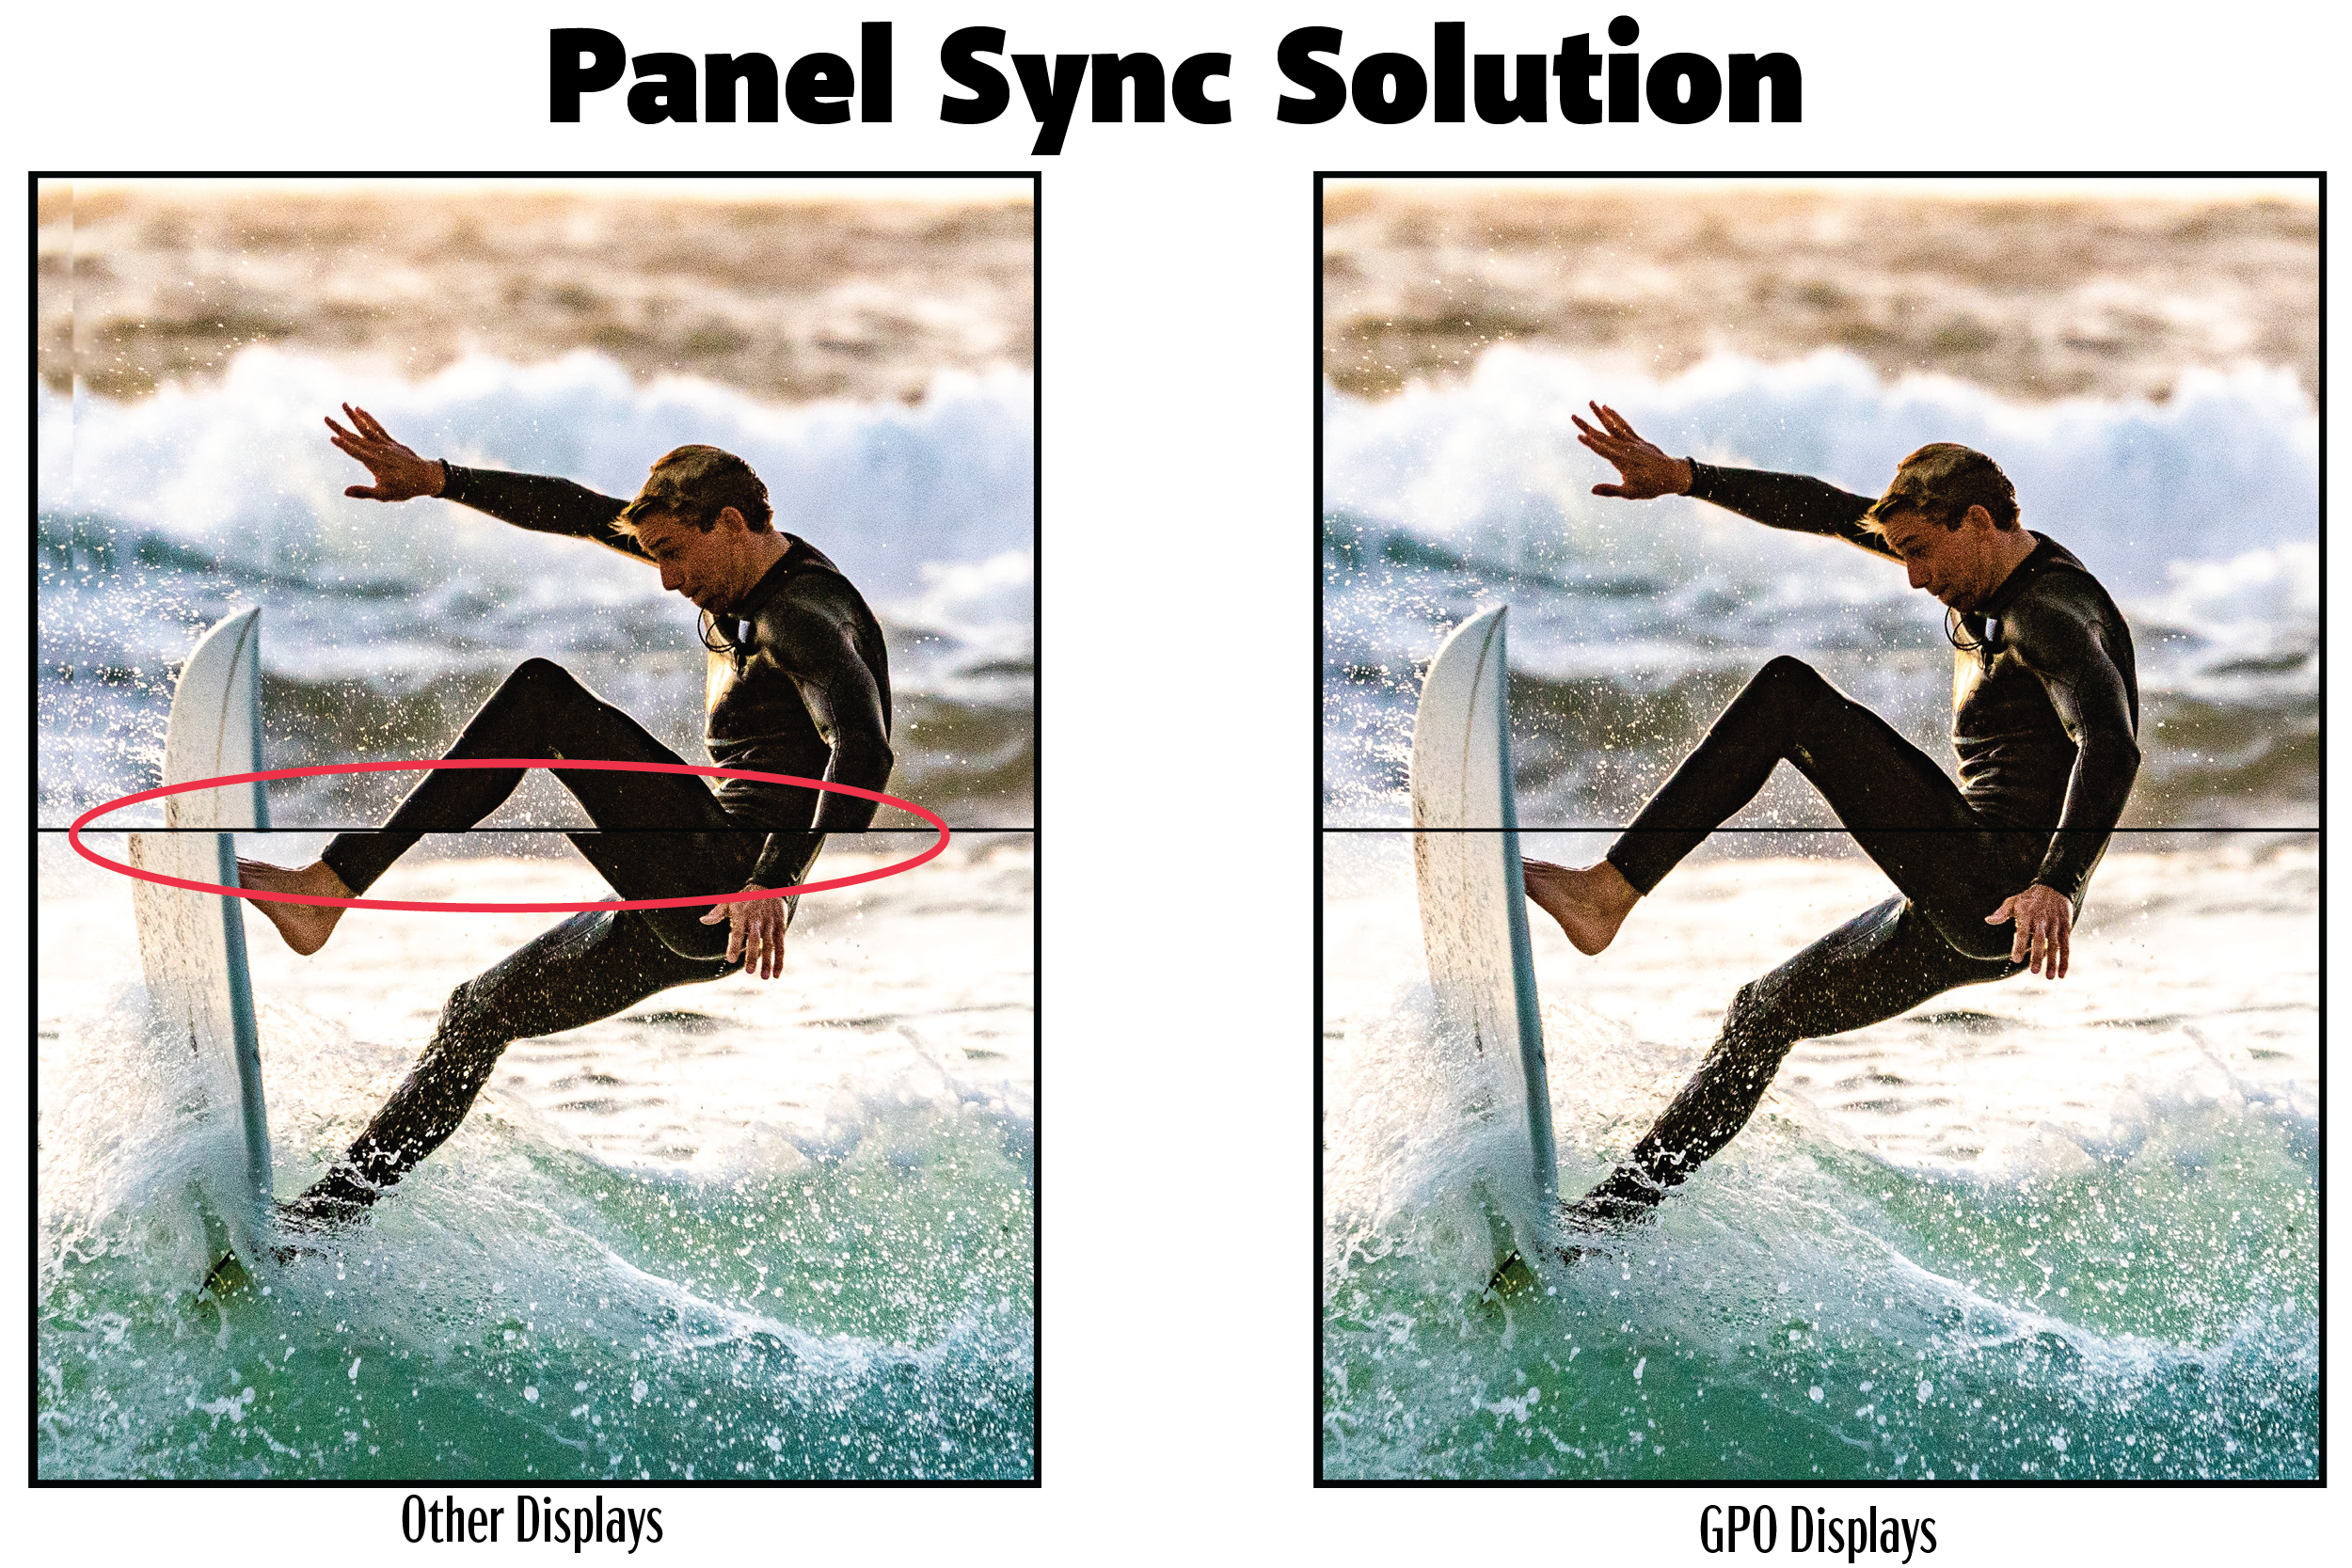 Panel sync solution